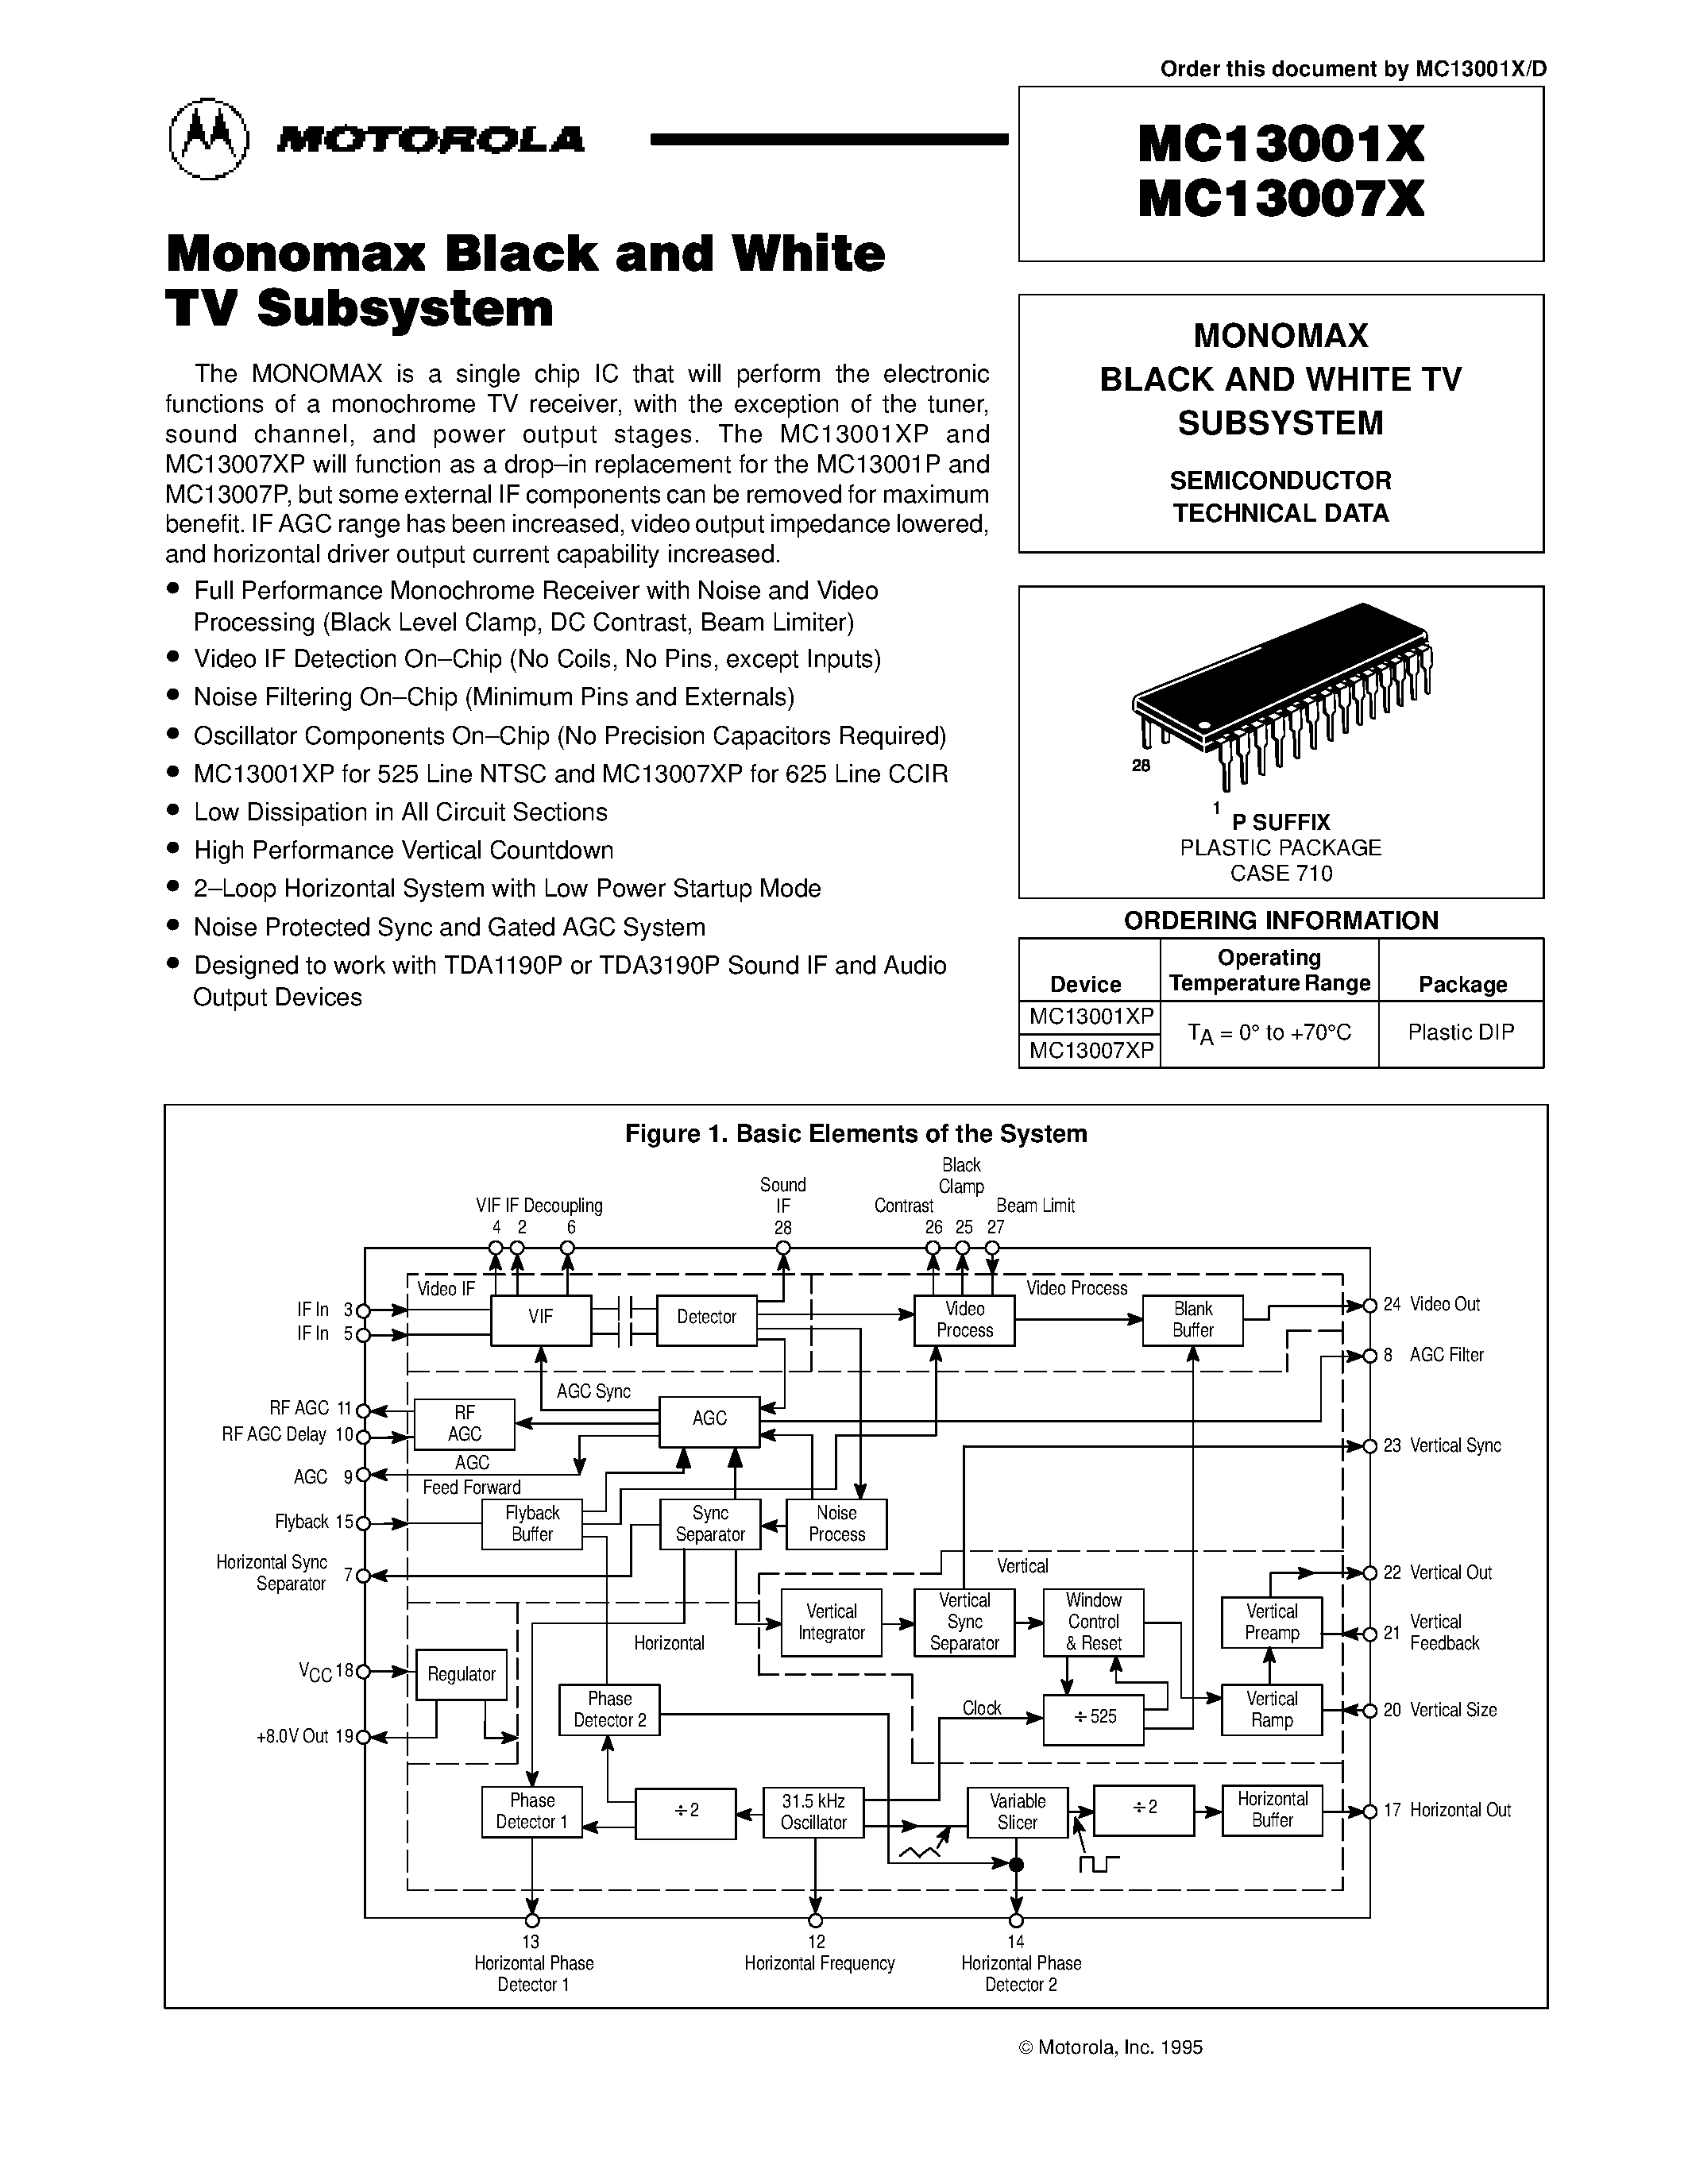 Даташит MC13007XP - MONOMAX BLACK AND WHITE TV SUBSYSTEM страница 1